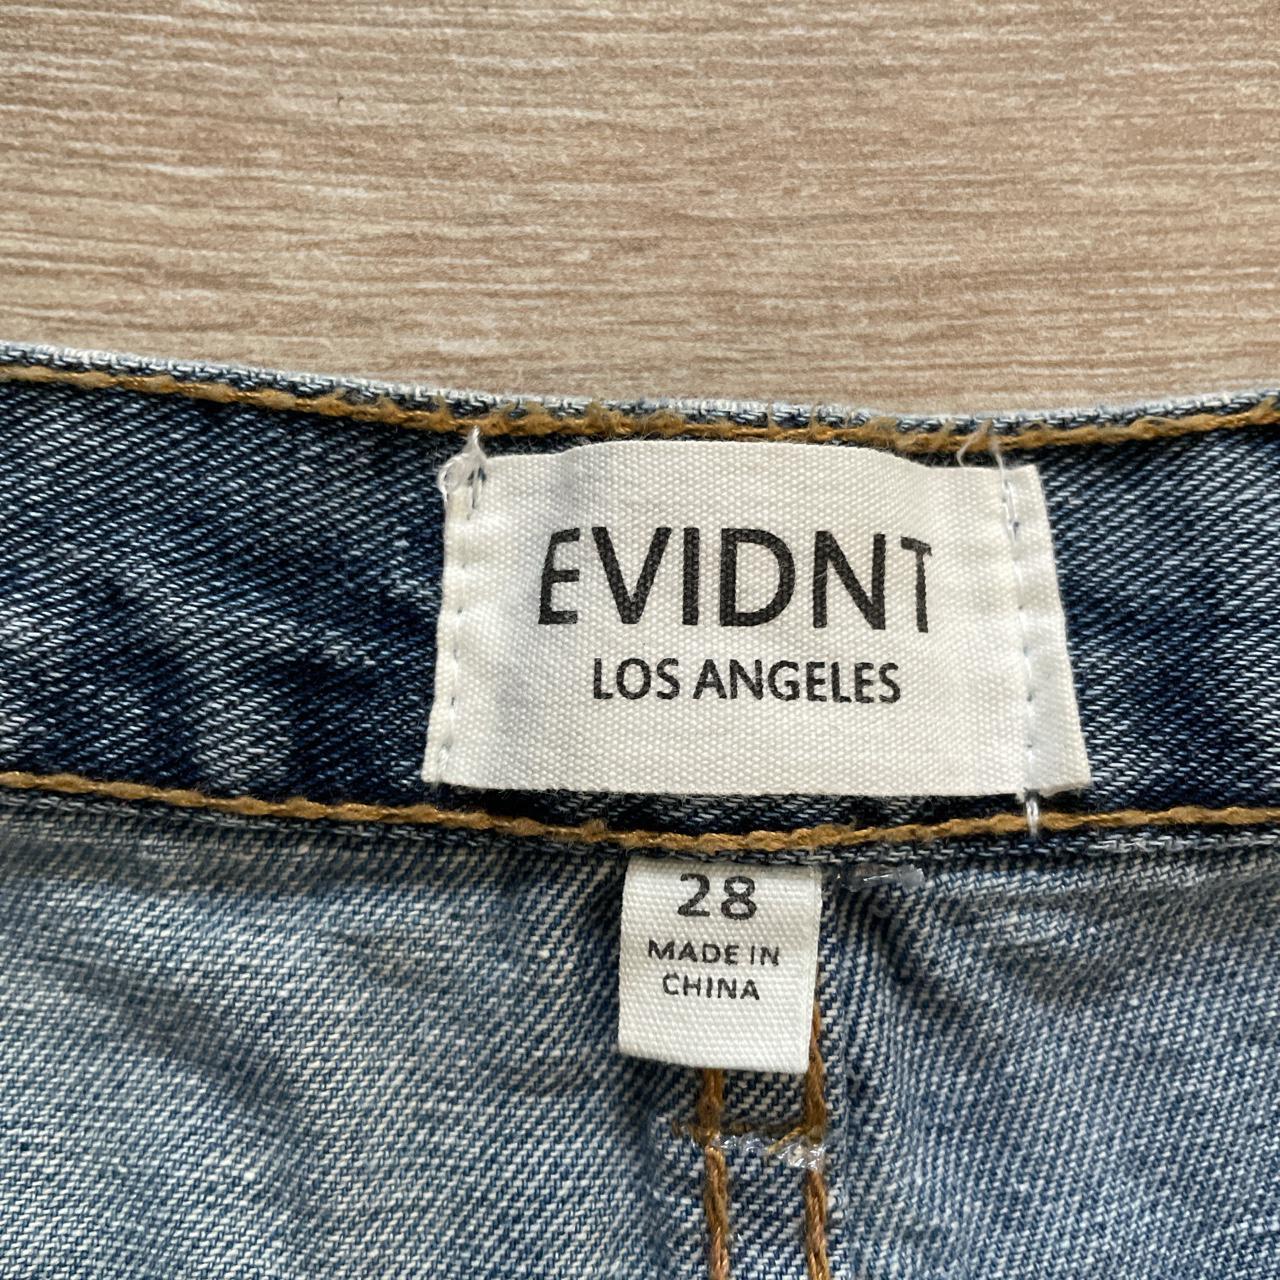 EVIDNT Women's Jeans (2)